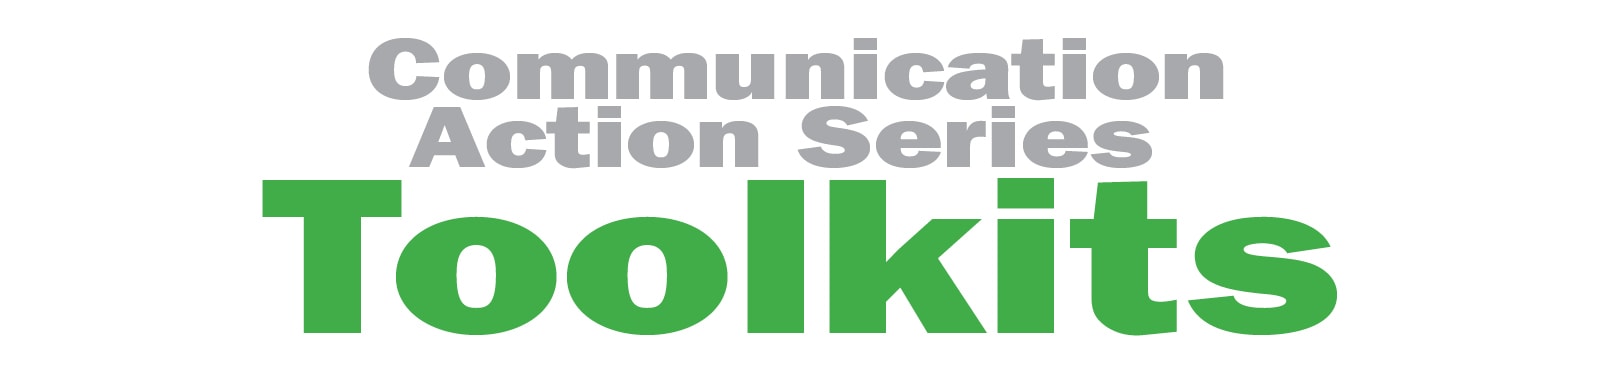 communication action series toolkit logo